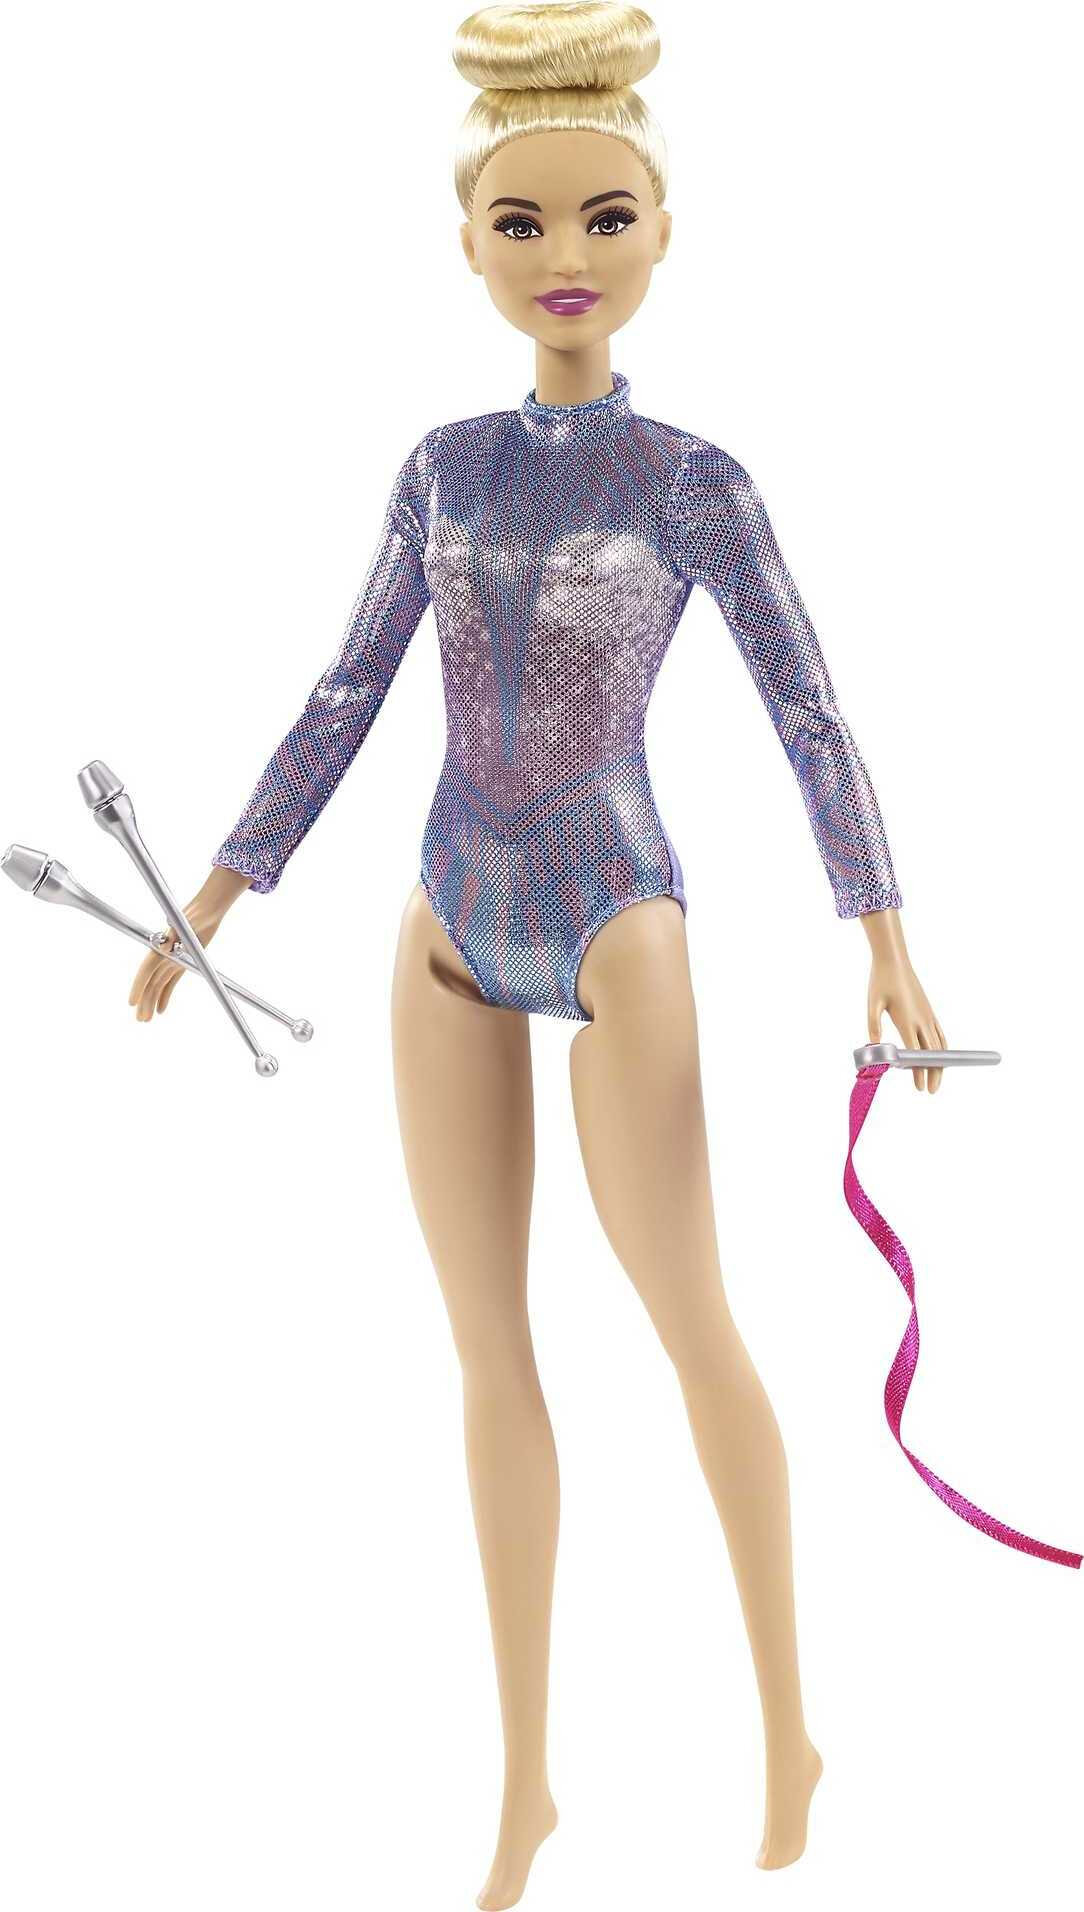 Barbie Rhythmic Gymnast Fashion Doll Dressed in Shimmery Leotard with Blonde Hair & Brown Eyes - image 1 of 6